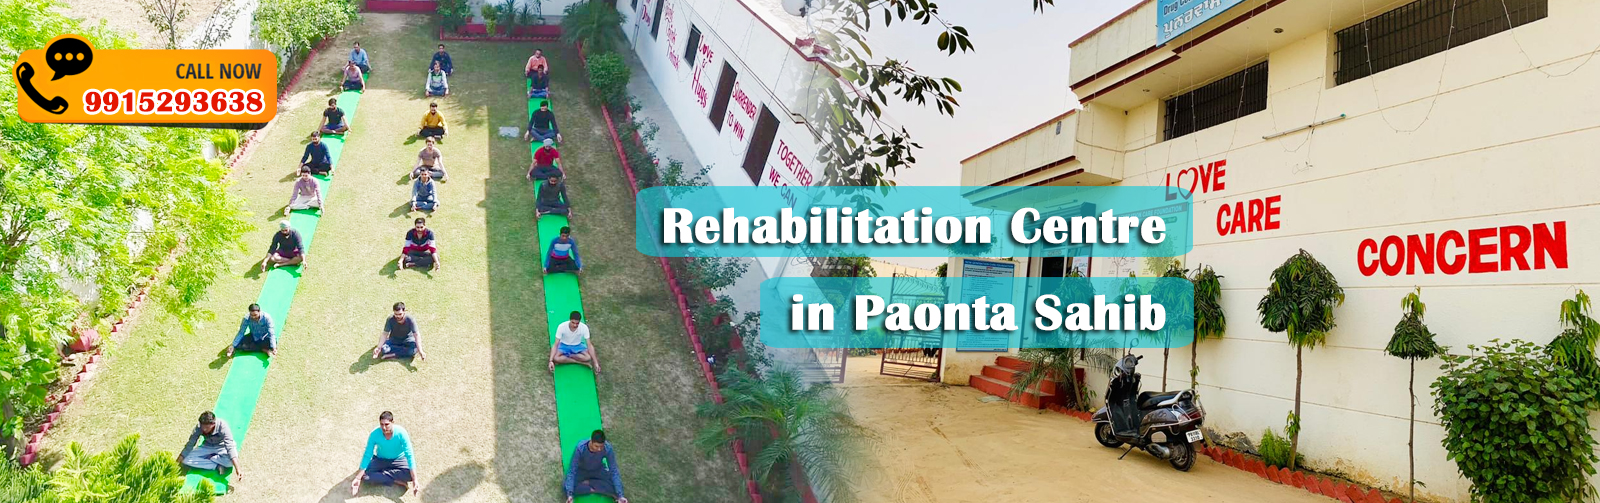 Rehabilitation Centre in Paonta Sahib